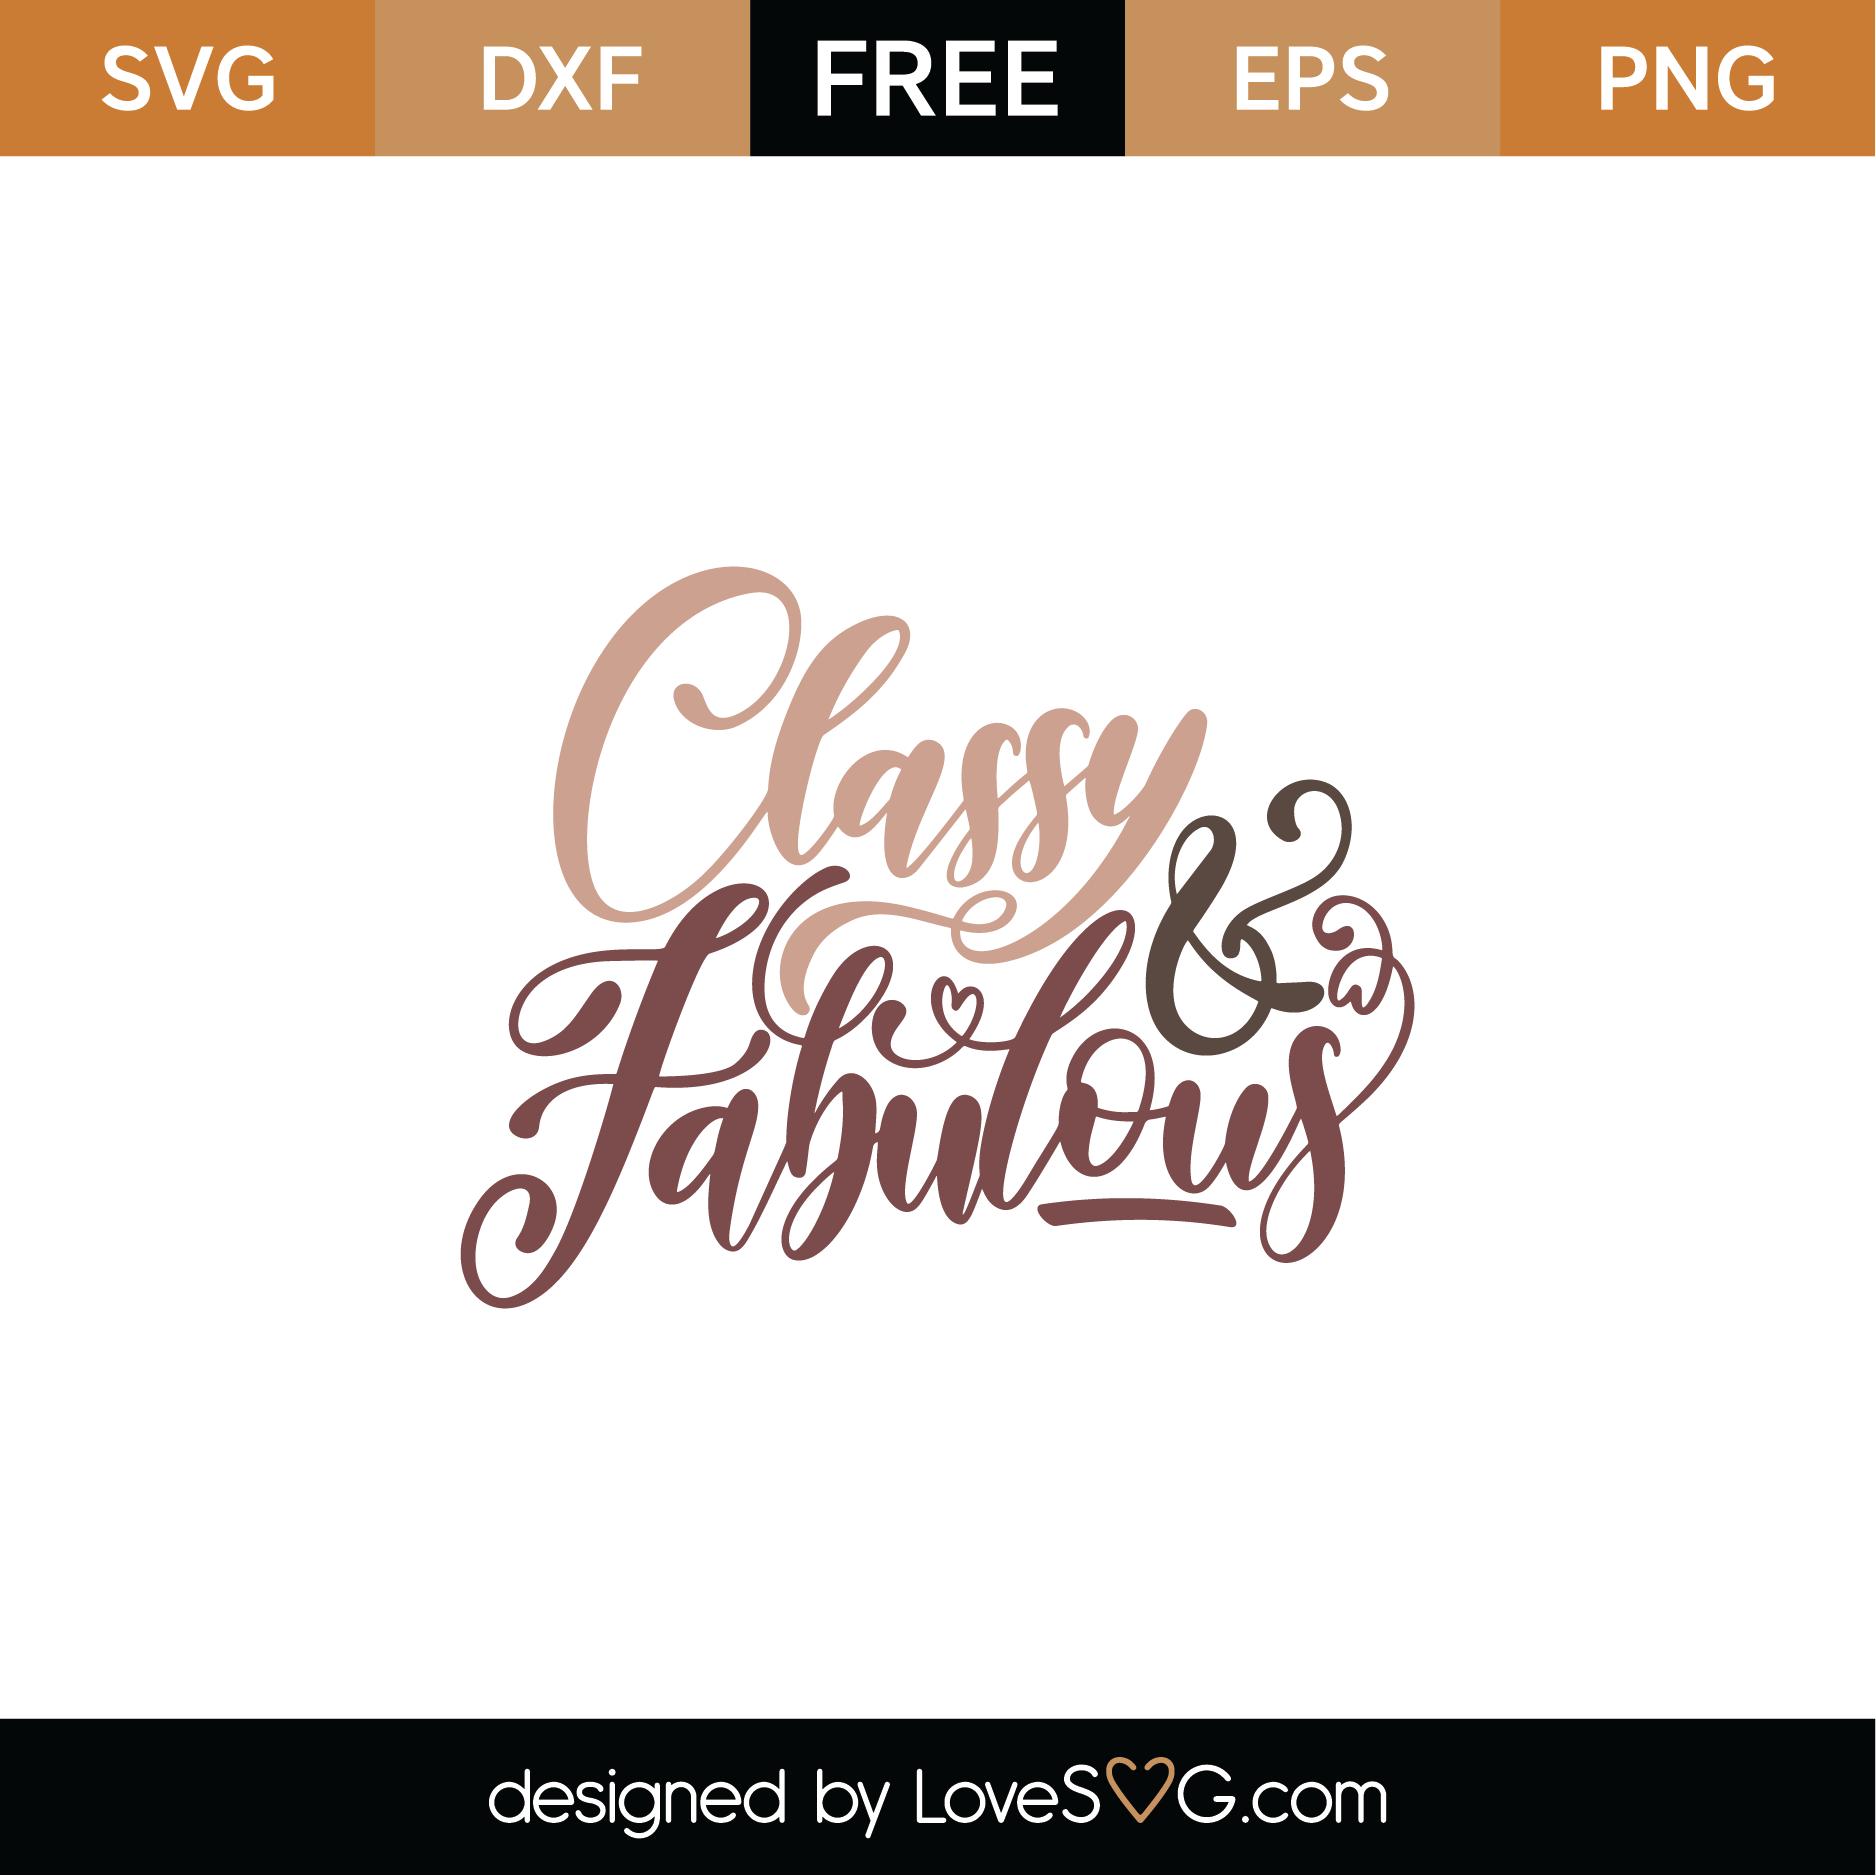 Free Classy and Fabulous SVG Cut File | Lovesvg.com